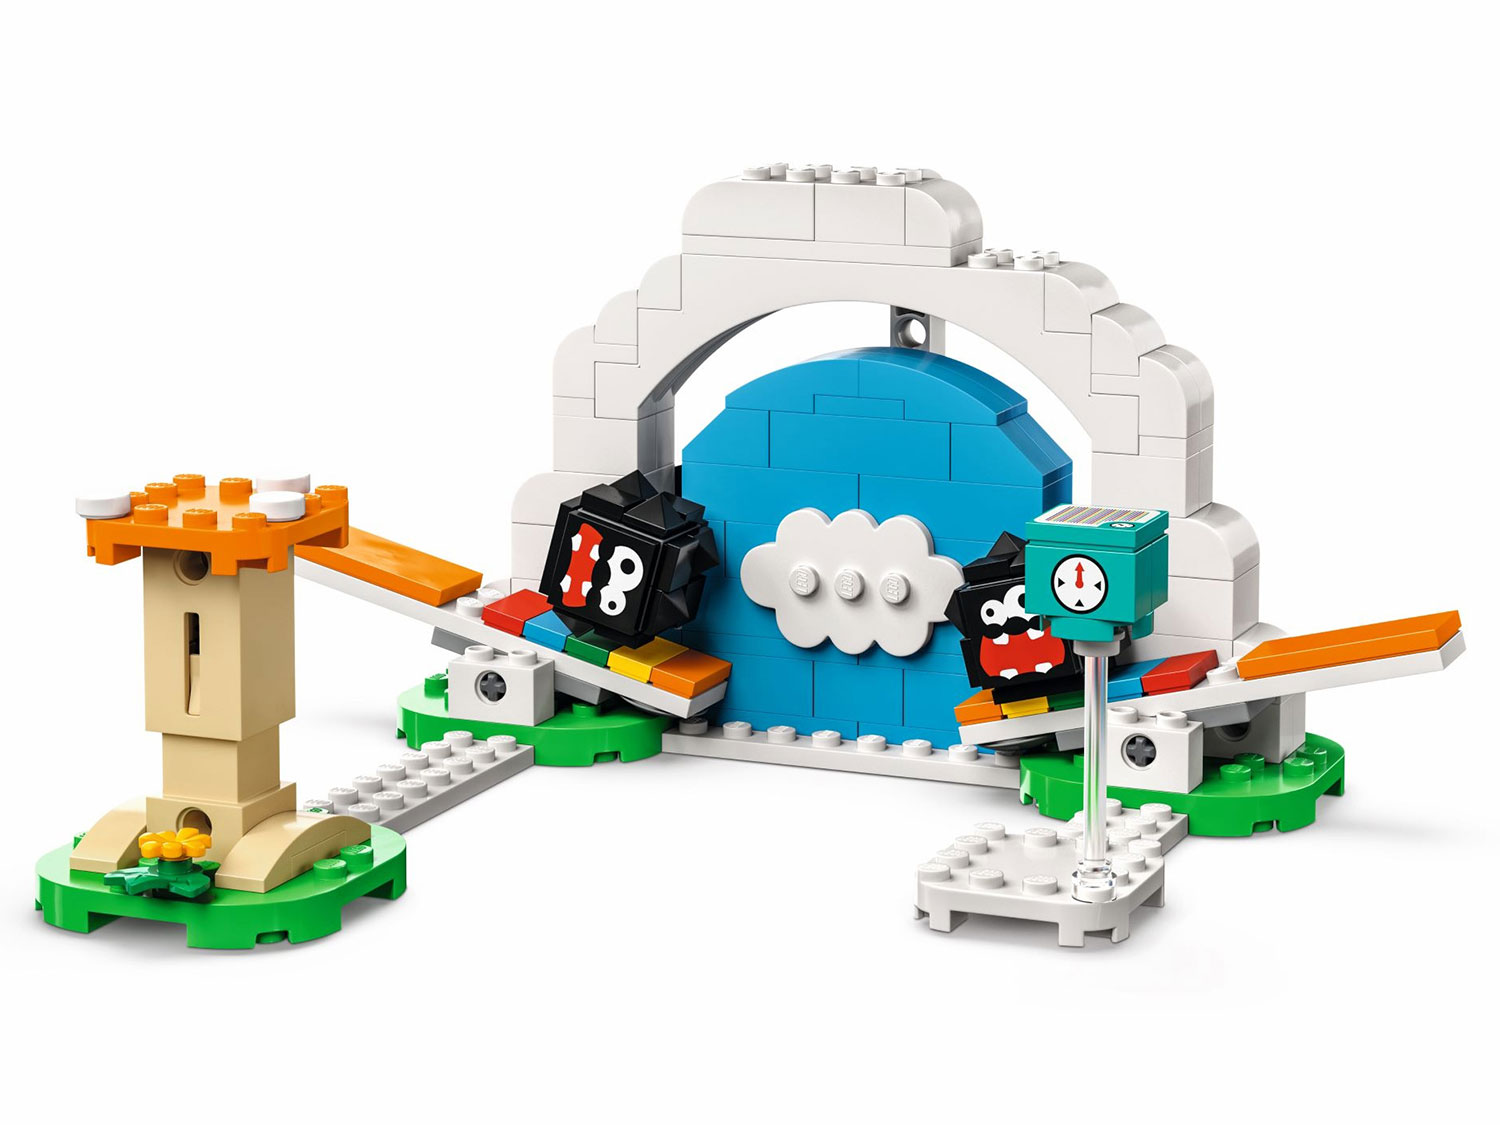 Конструктор LEGO Super Mario Fuzzy Flippers Expansion Set 71405